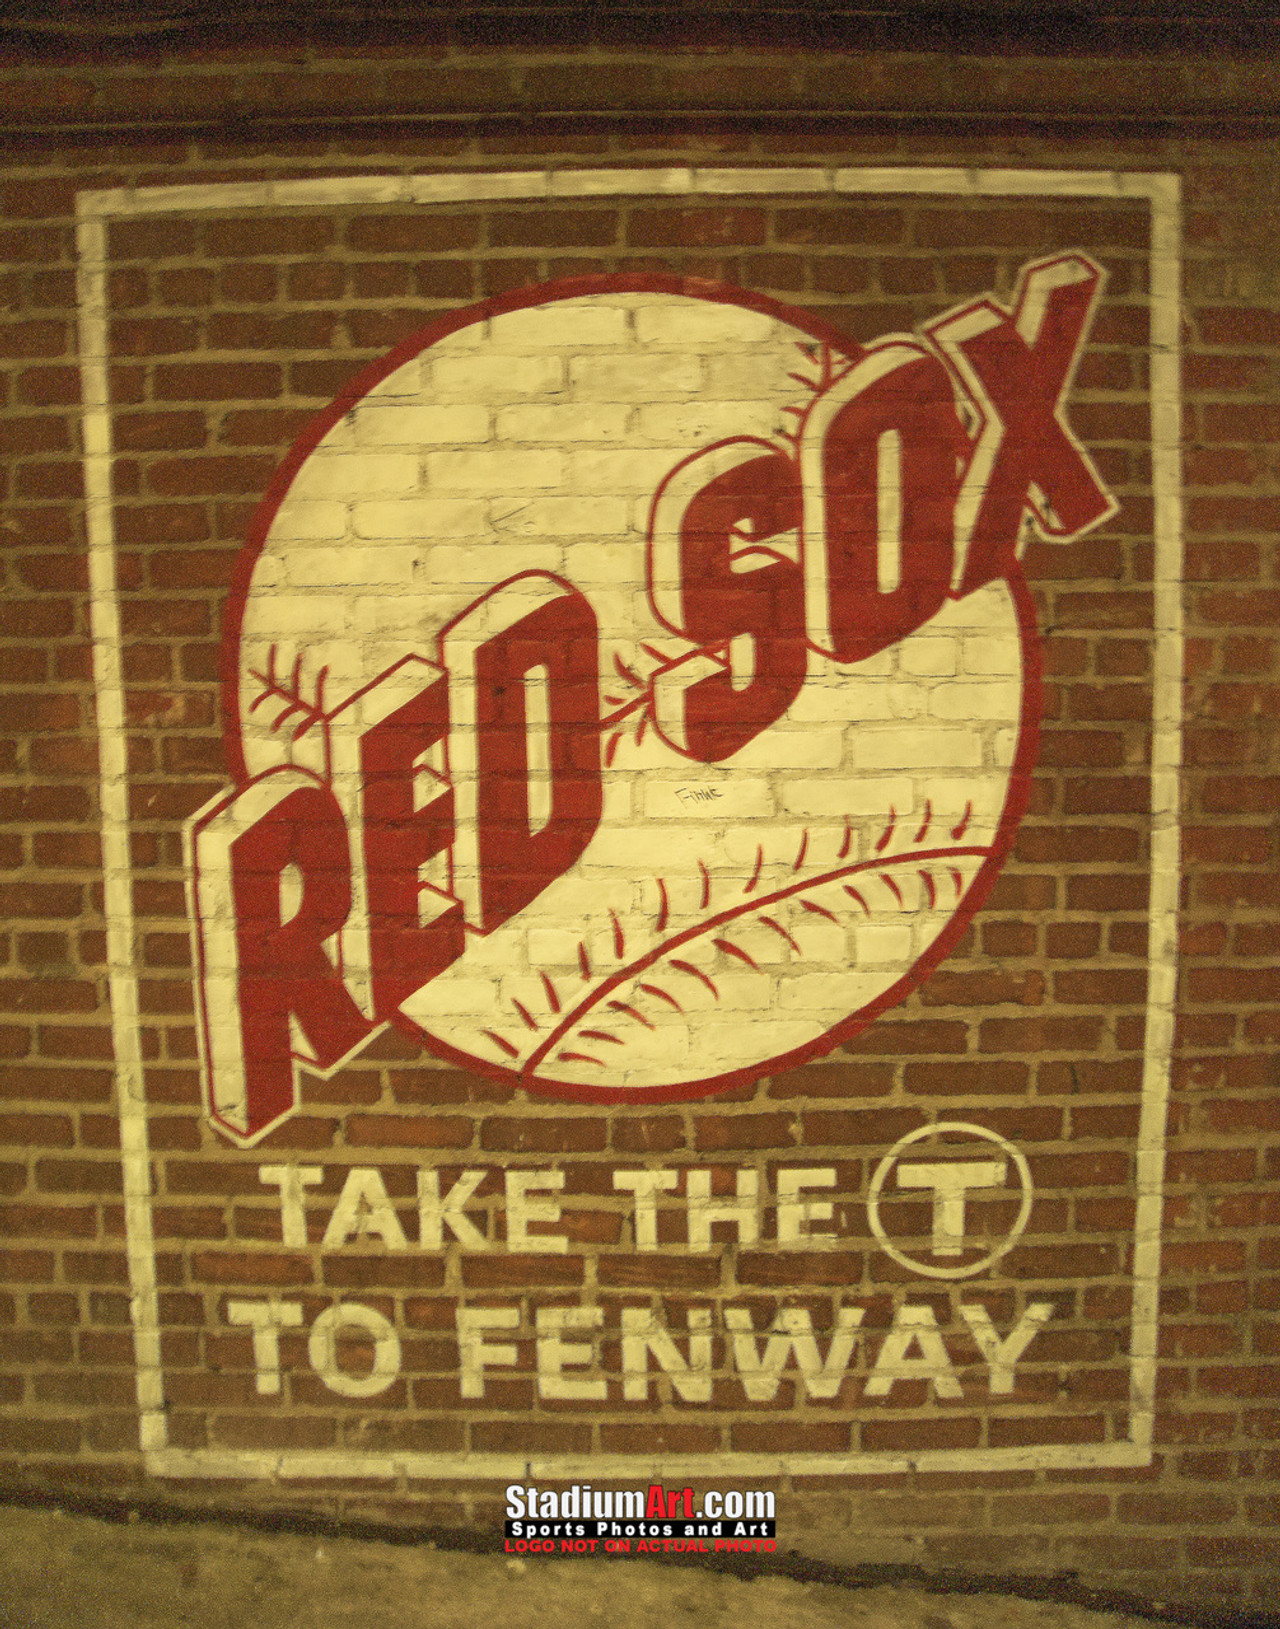 Boston Red Sox Fenway Park Baseball Stadium Wall Sign 8x10 to 48x36 photos  100